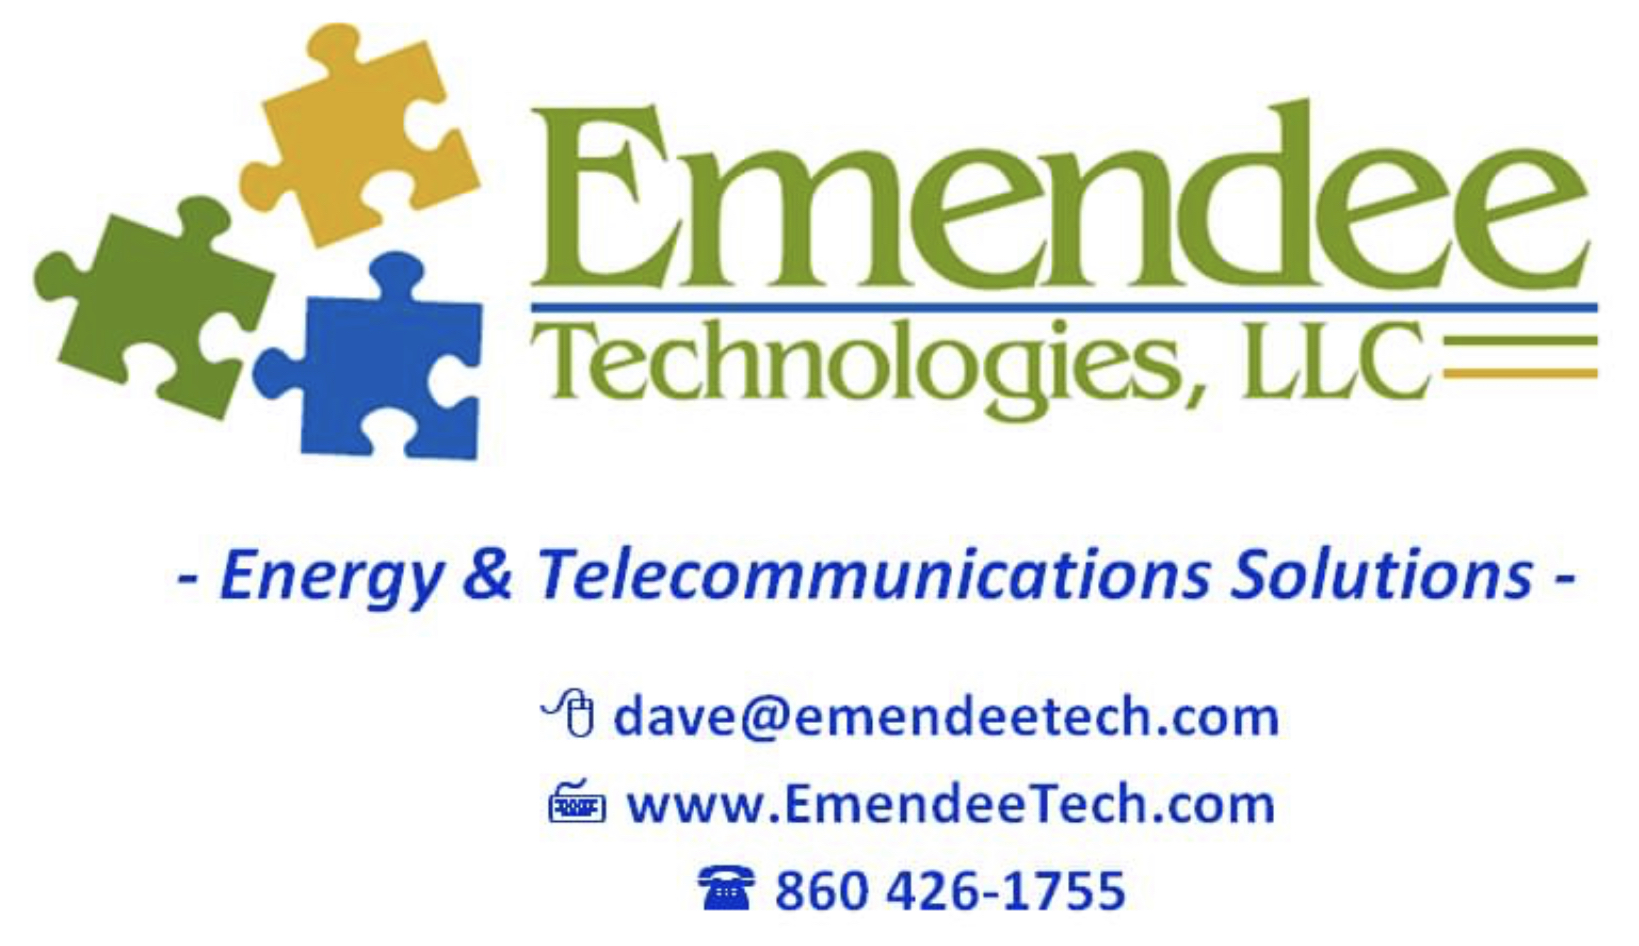 Emendee Technologies, LLC